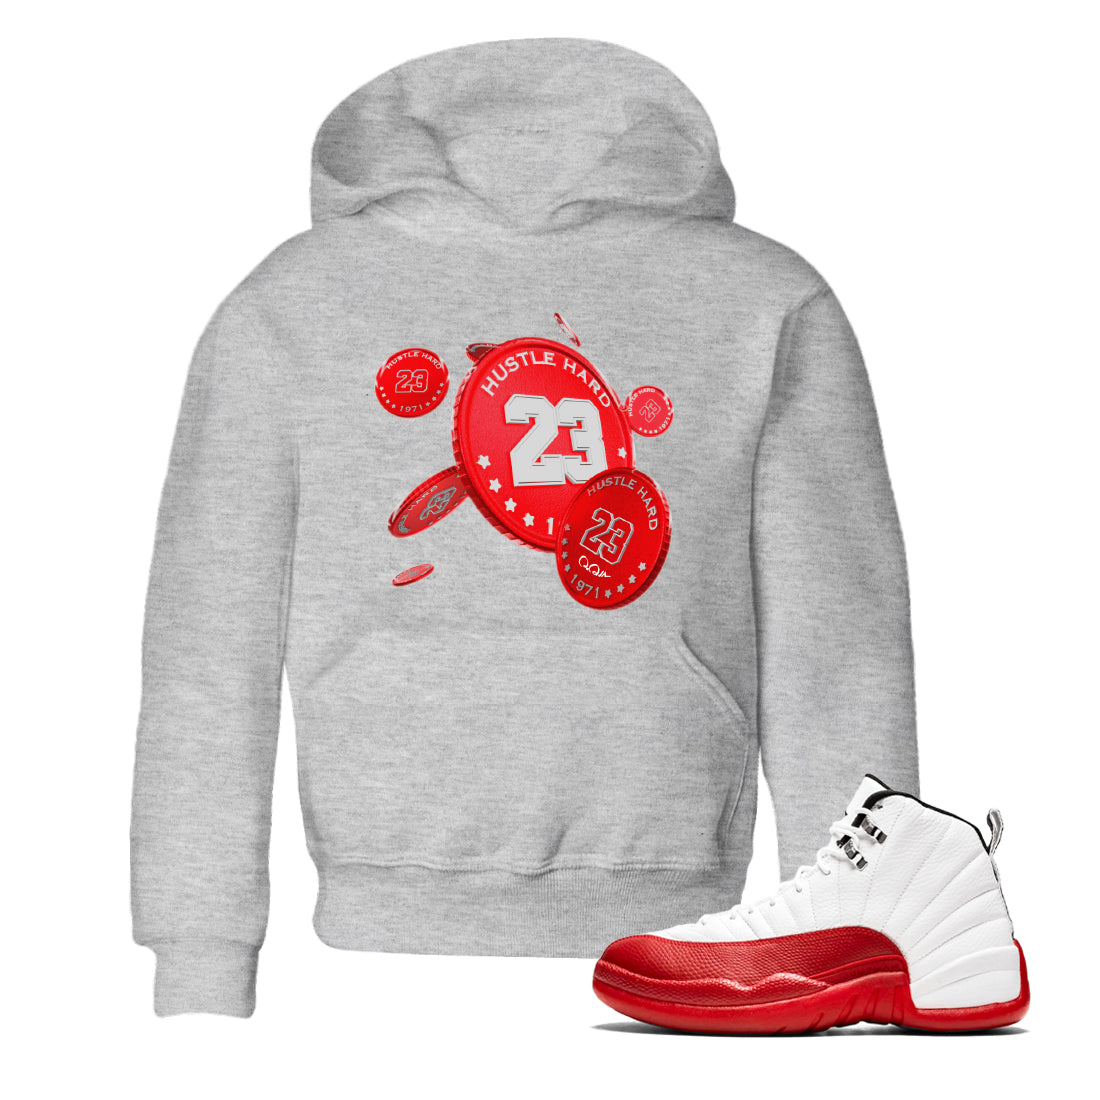 Air Jordan 12 Cherry Sneaker Match Tees Coin Drop Sneaker Tees AJ12 Cherry Sneaker Release Tees Kids Shirts Heather Grey 1